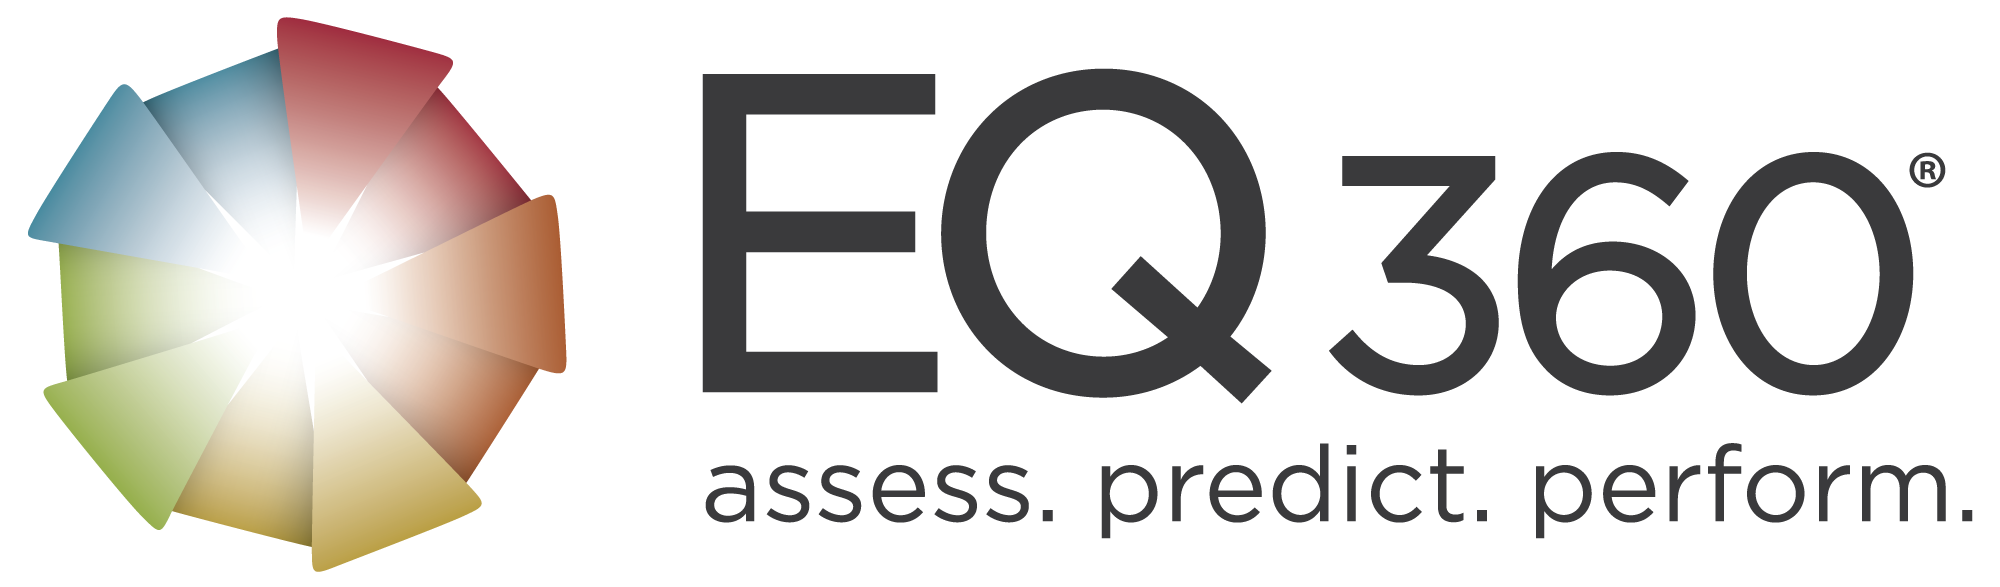 Minett Consulting Emotional Intelligence EQ360 certification logo